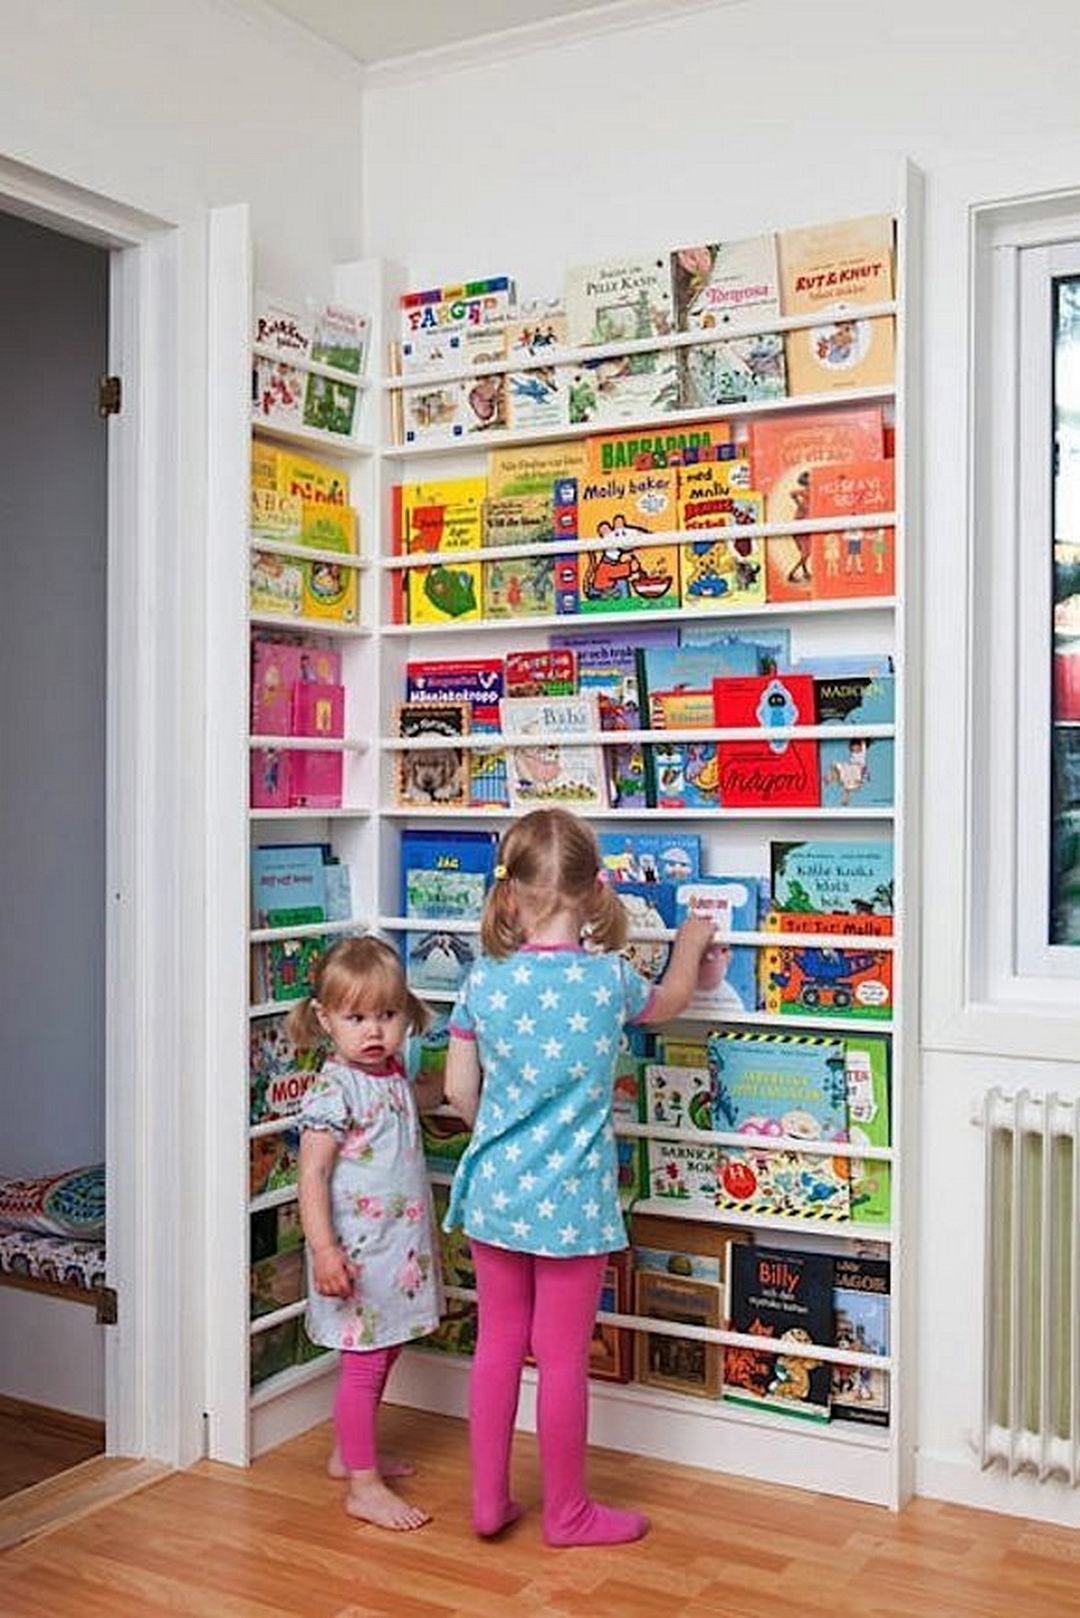 Childrens wall mounted bookshelves